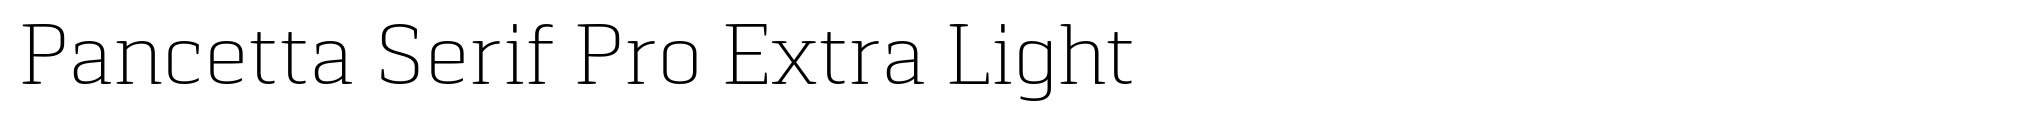 Pancetta Serif Pro Extra Light image